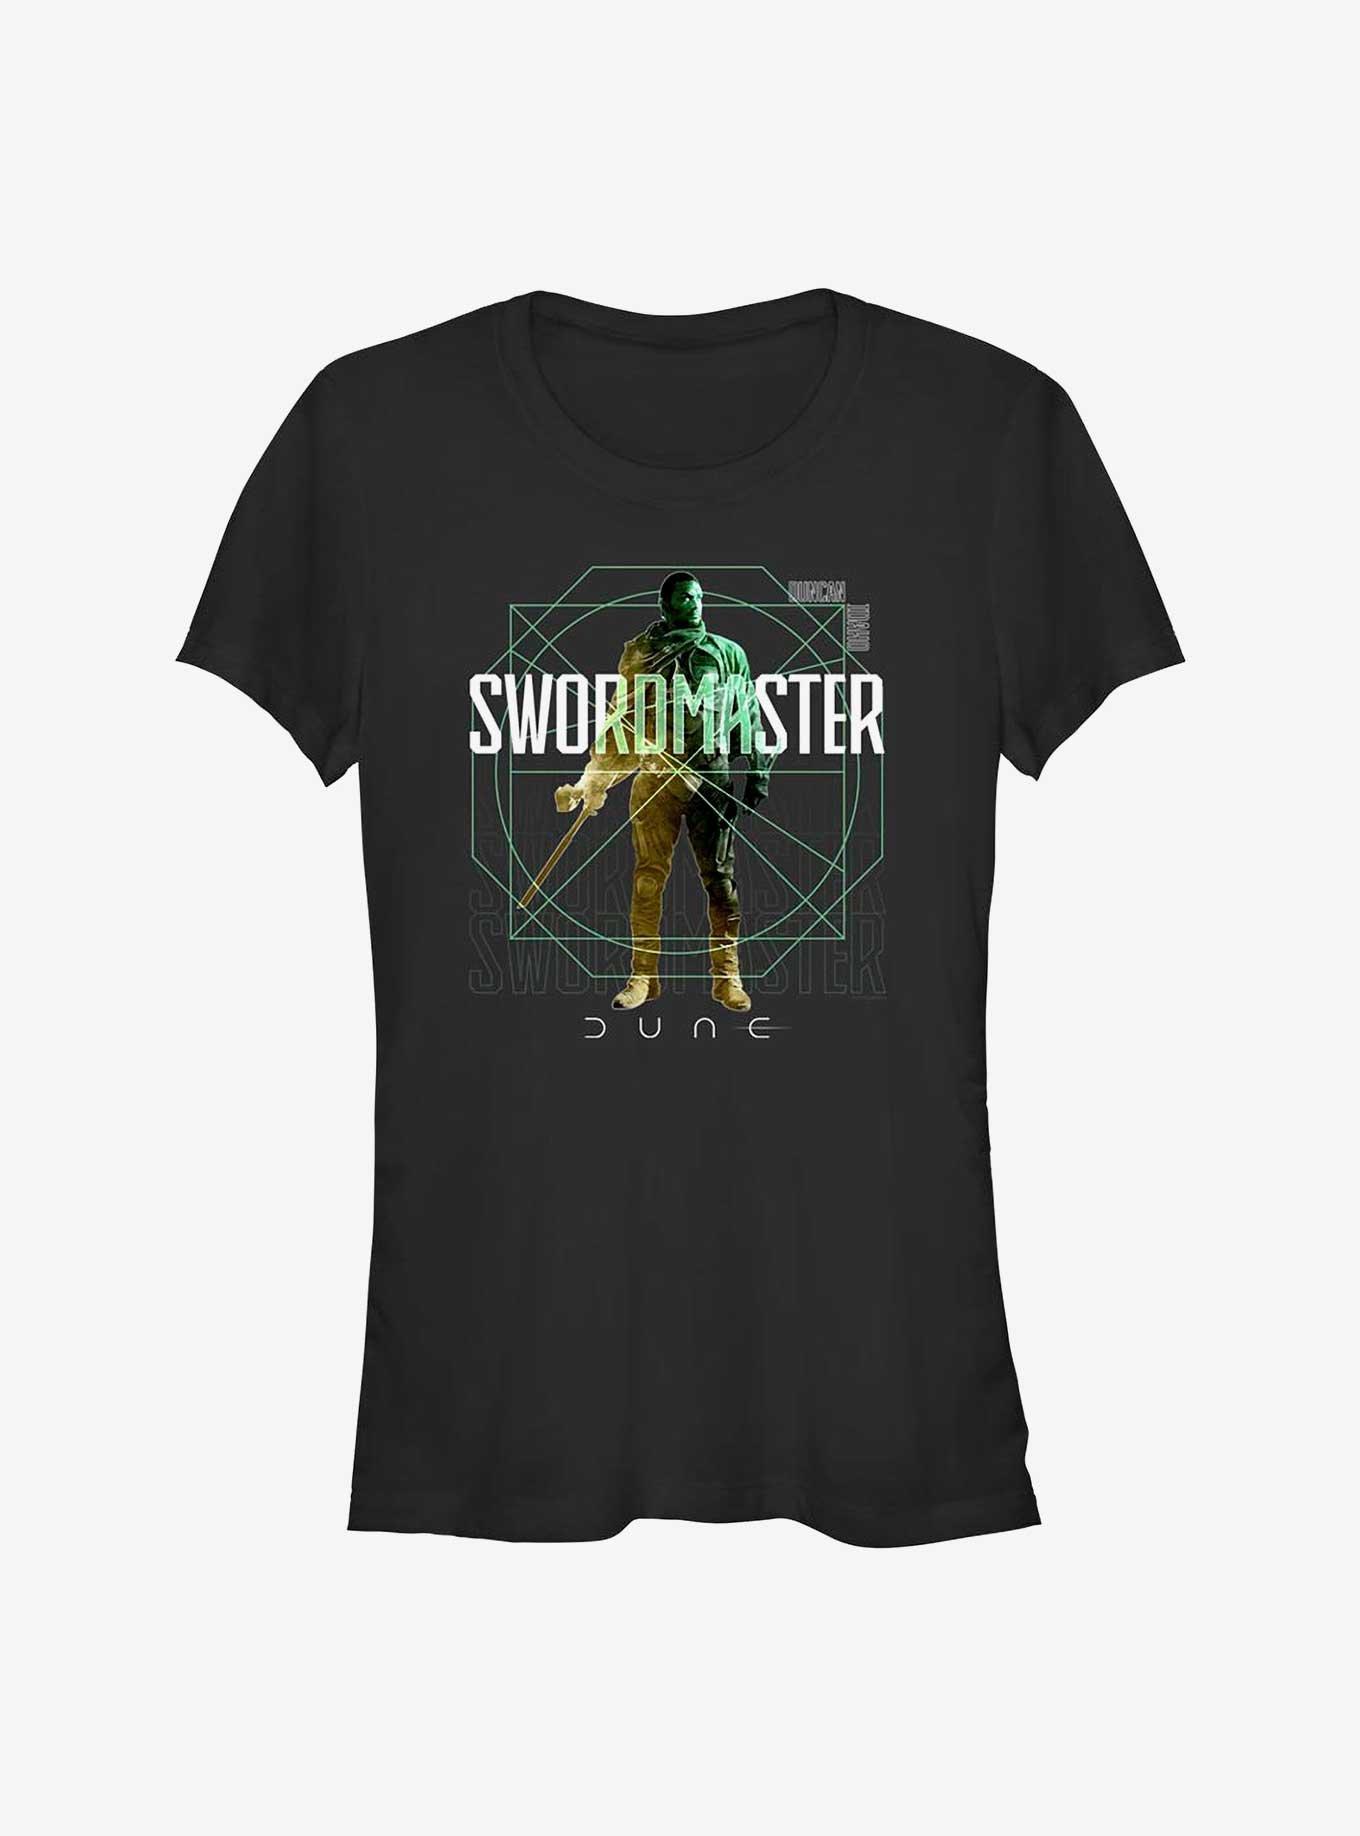 Dune Duncan Idaho Sword Master Girls T-Shirt, BLACK, hi-res